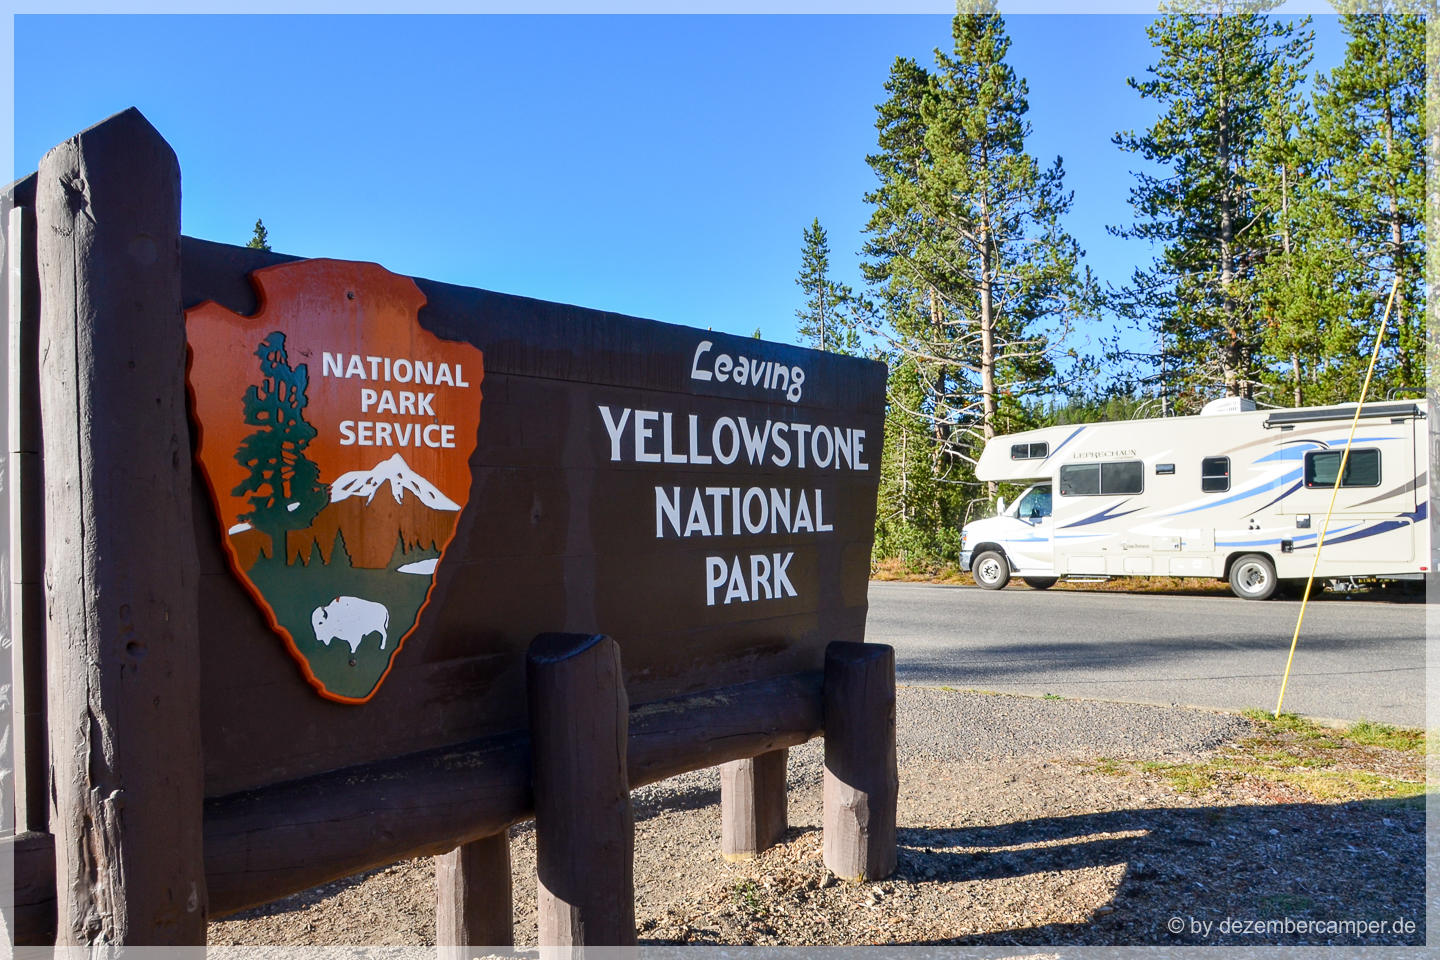 Leaving Yellowstone NP